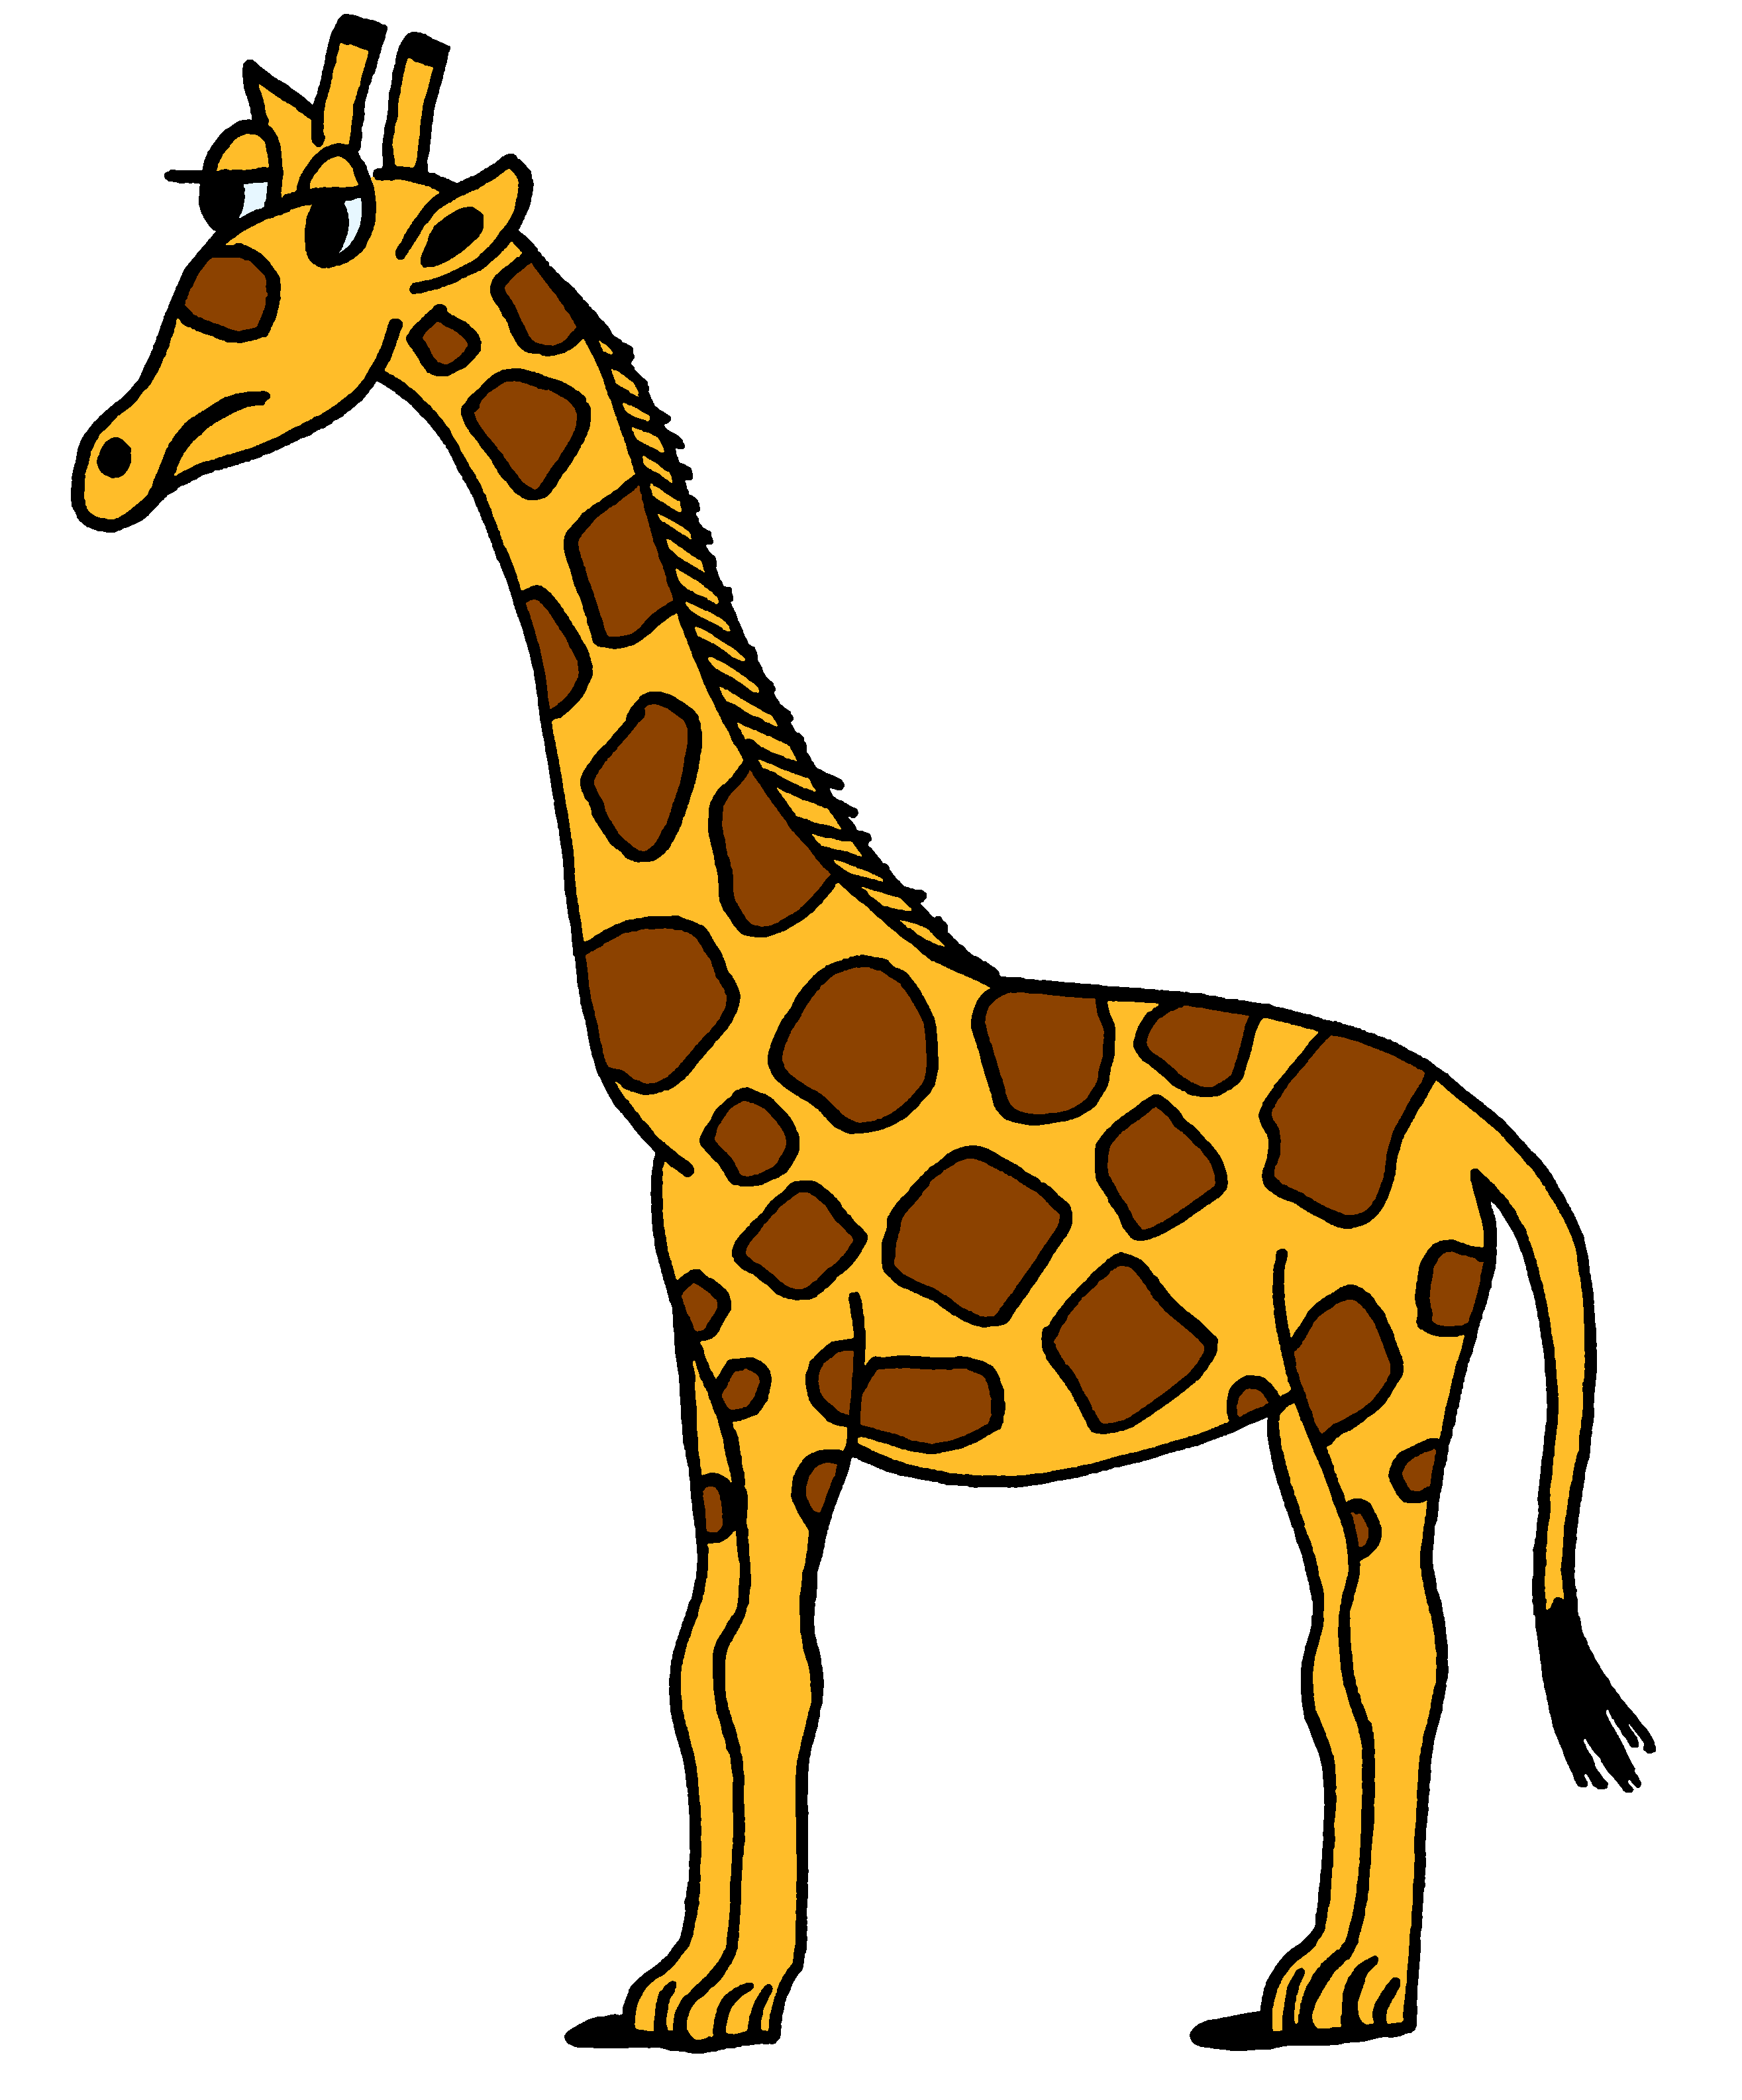 Giraffe clipart #19, Download drawings